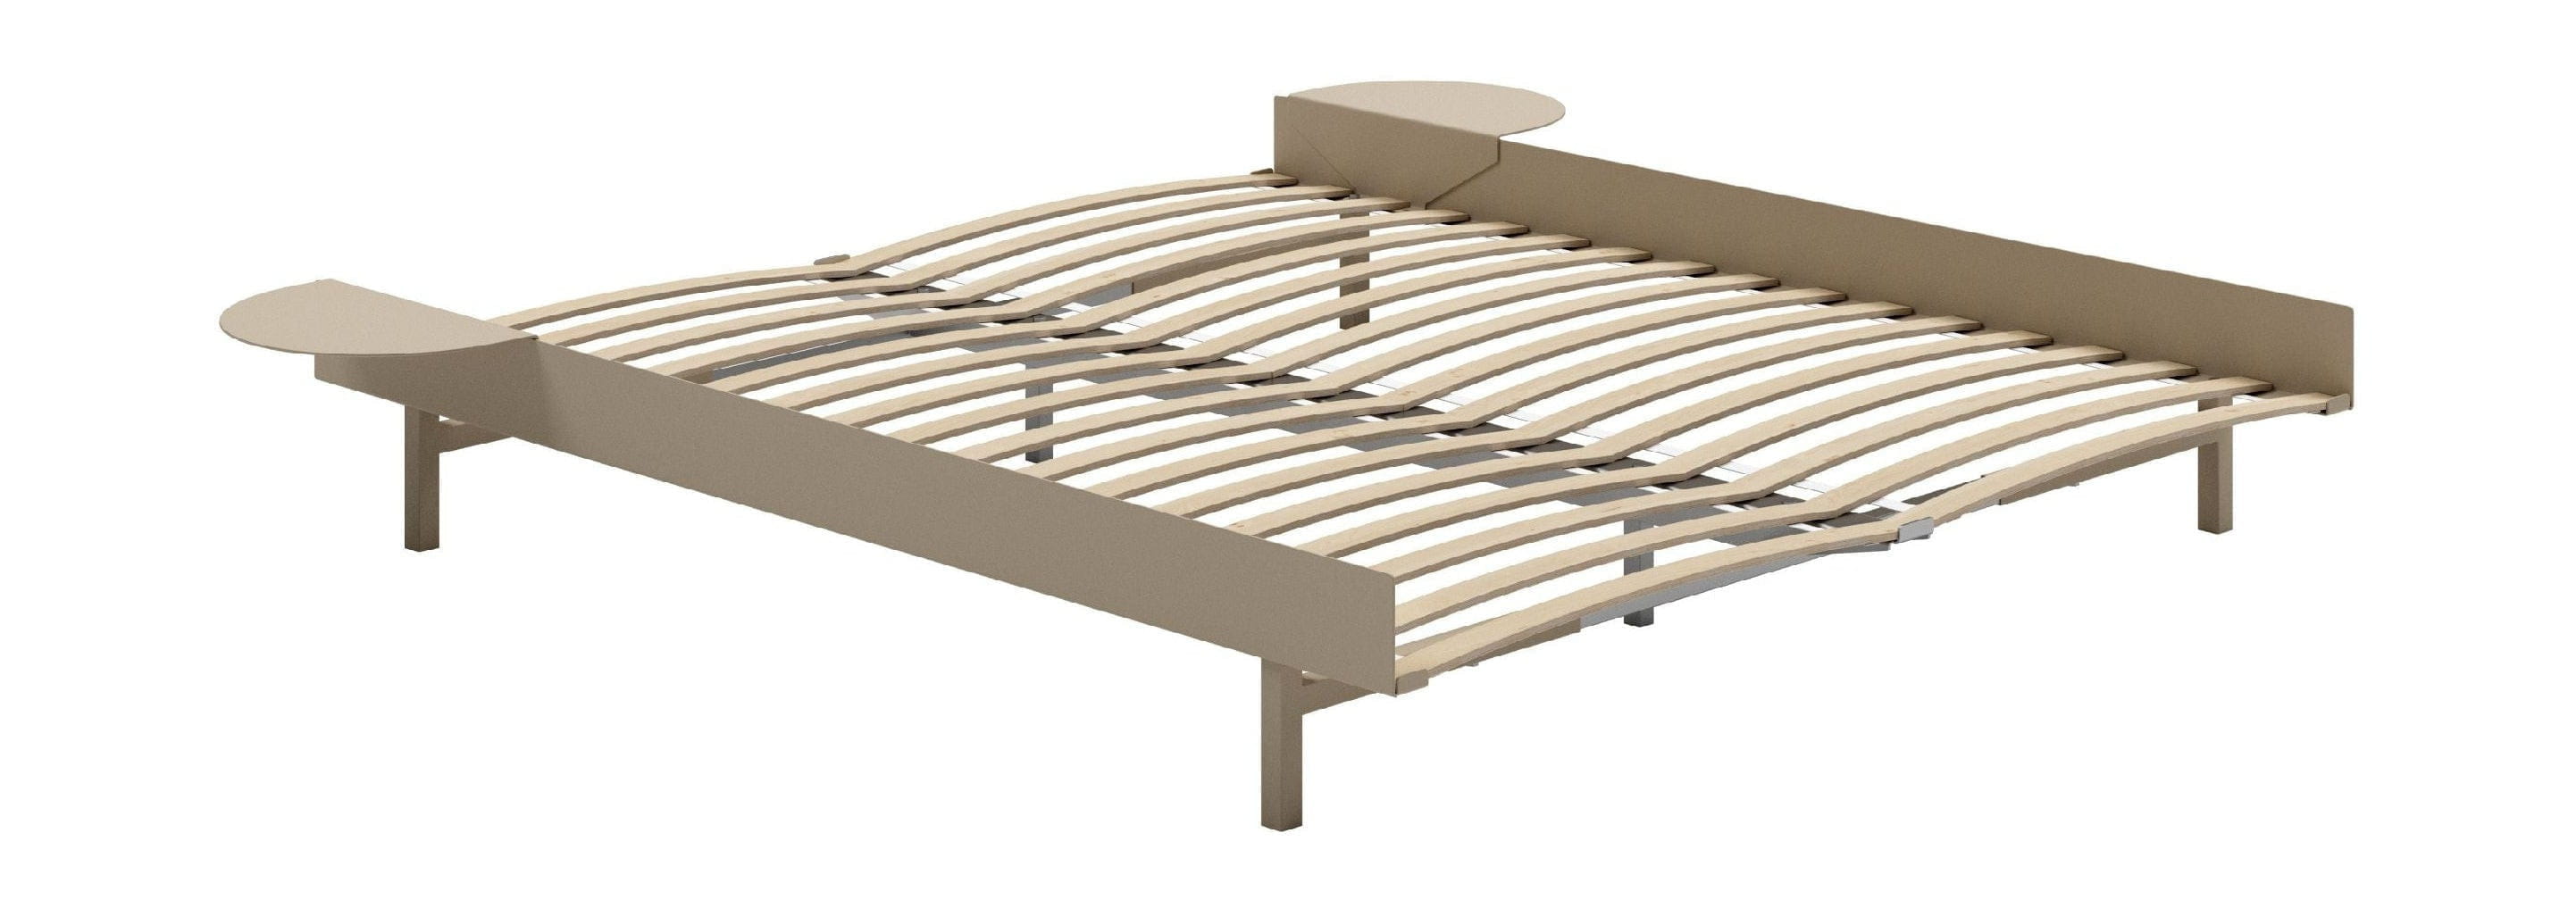 Moebe seng med sengelister og 2 nattbord 160 cm, sand